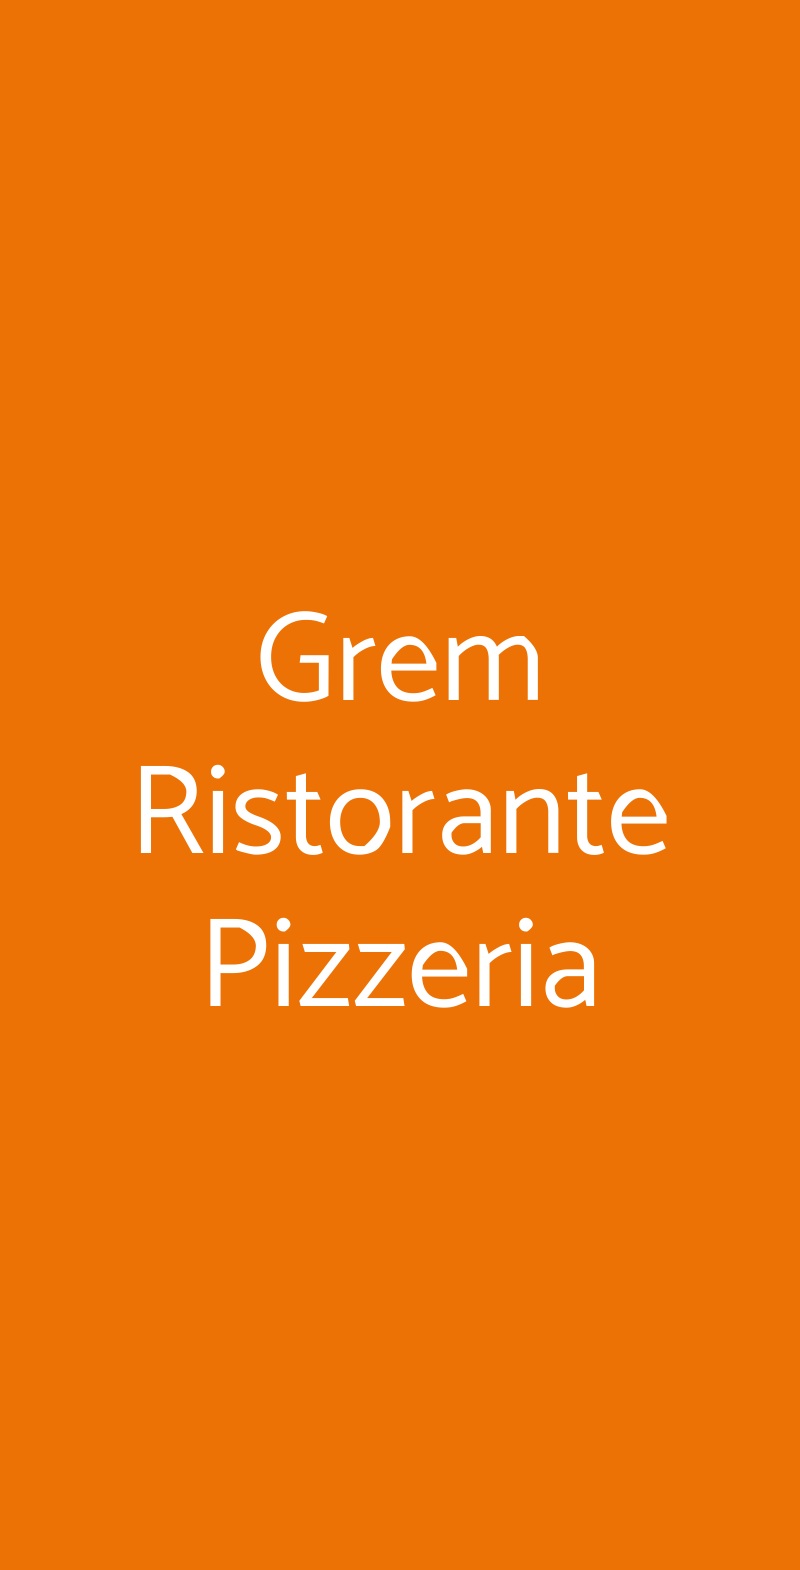 Grem Ristorante Pizzeria Brescia menù 1 pagina